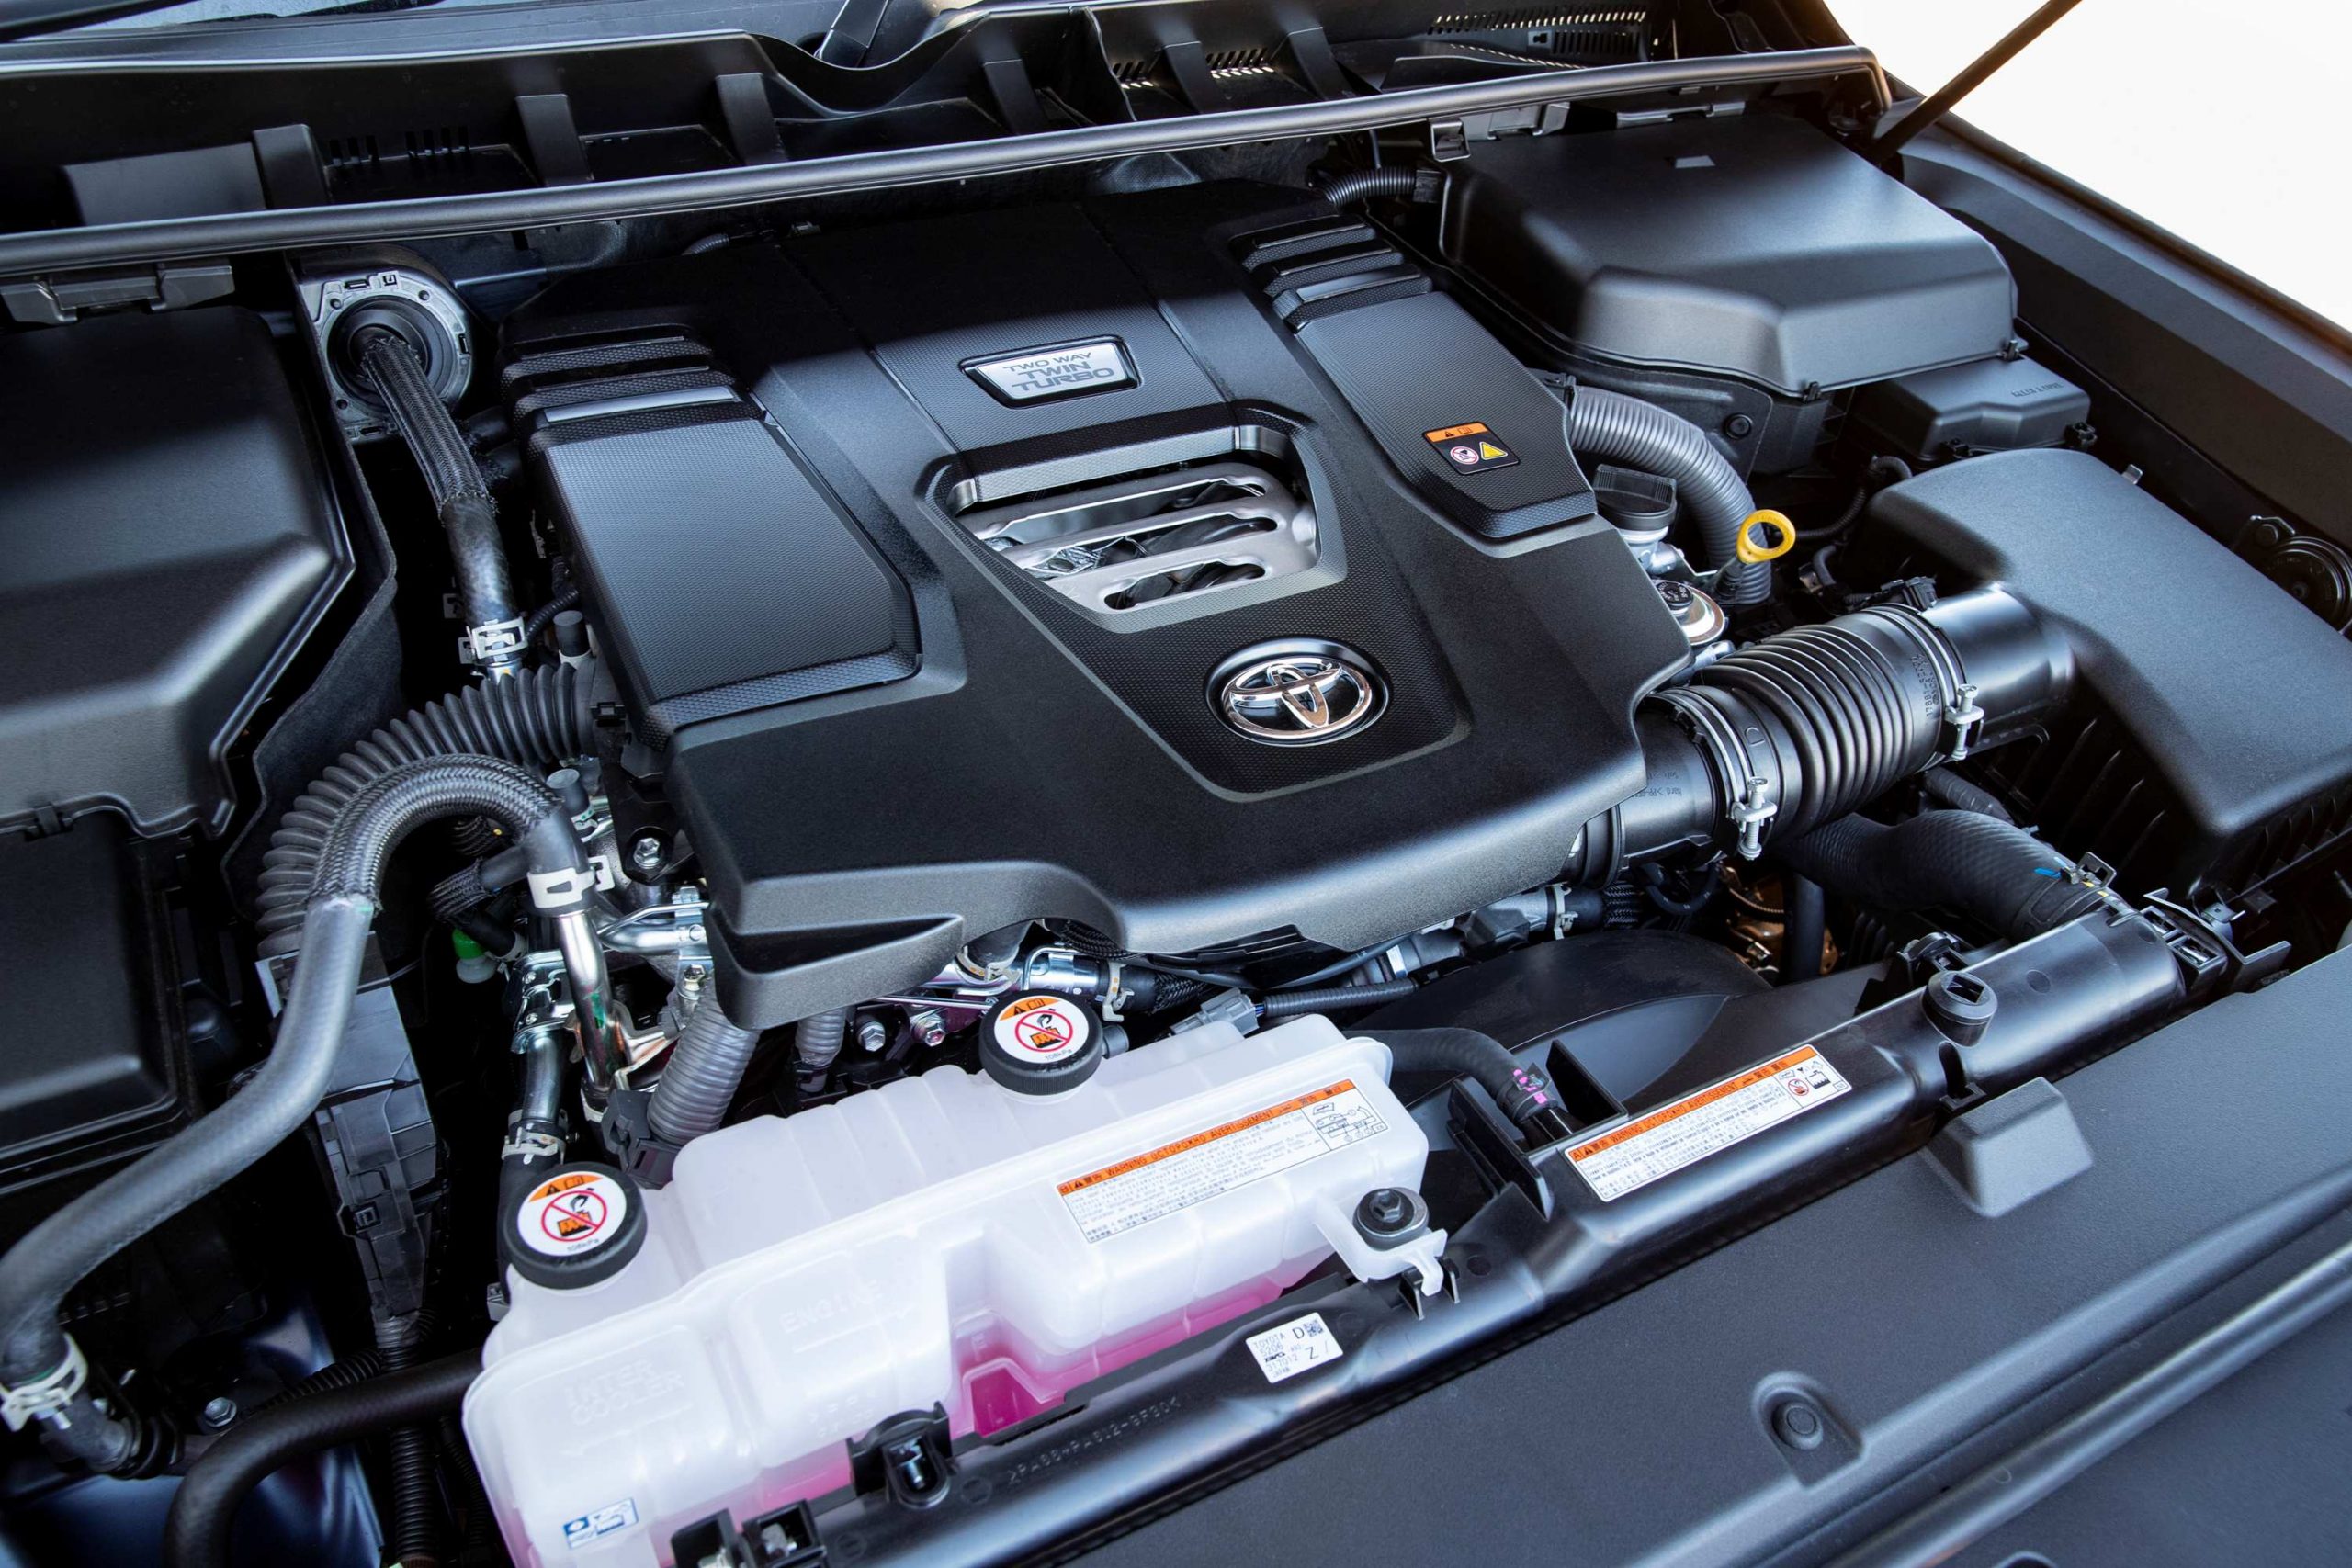 2021 Toyota LandCruiser 300 Series V6 twin turbo diesel engine.